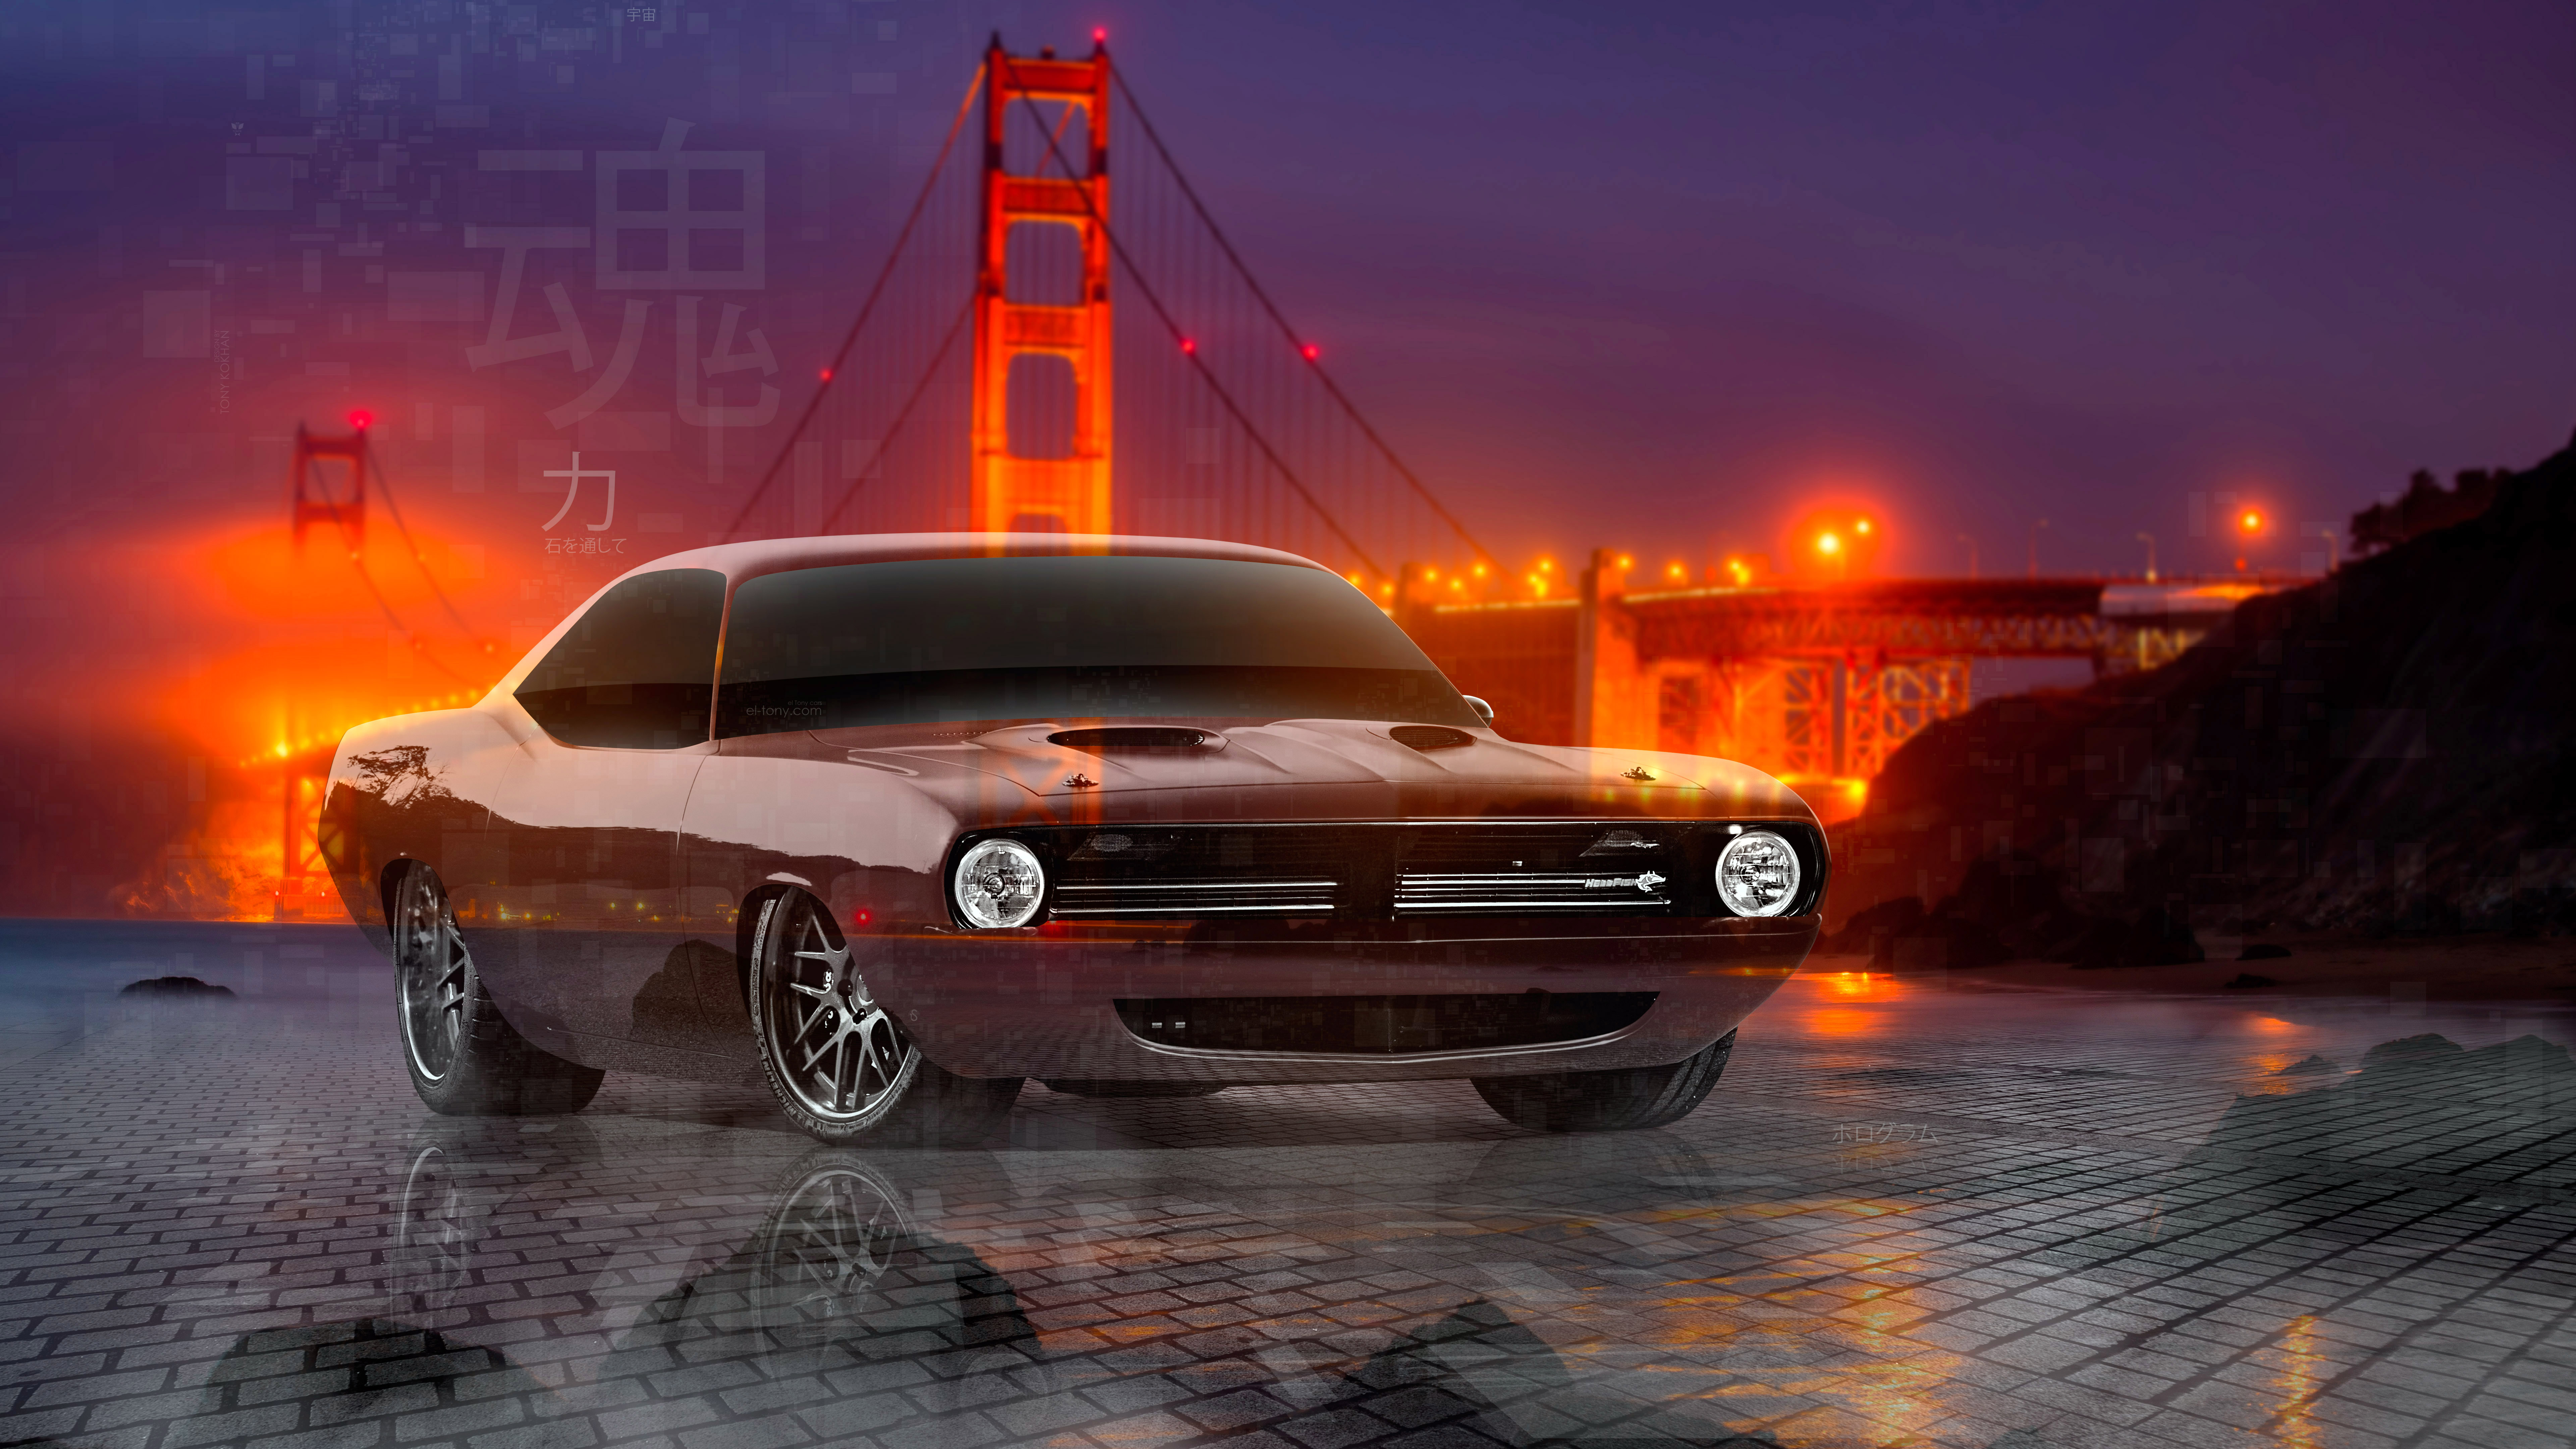 Plymouth-Barracuda-Super-Crystal-Soul-Force-Through-The-Stones-Golden-Gate-Bridge-San-Francisco-Night-Car